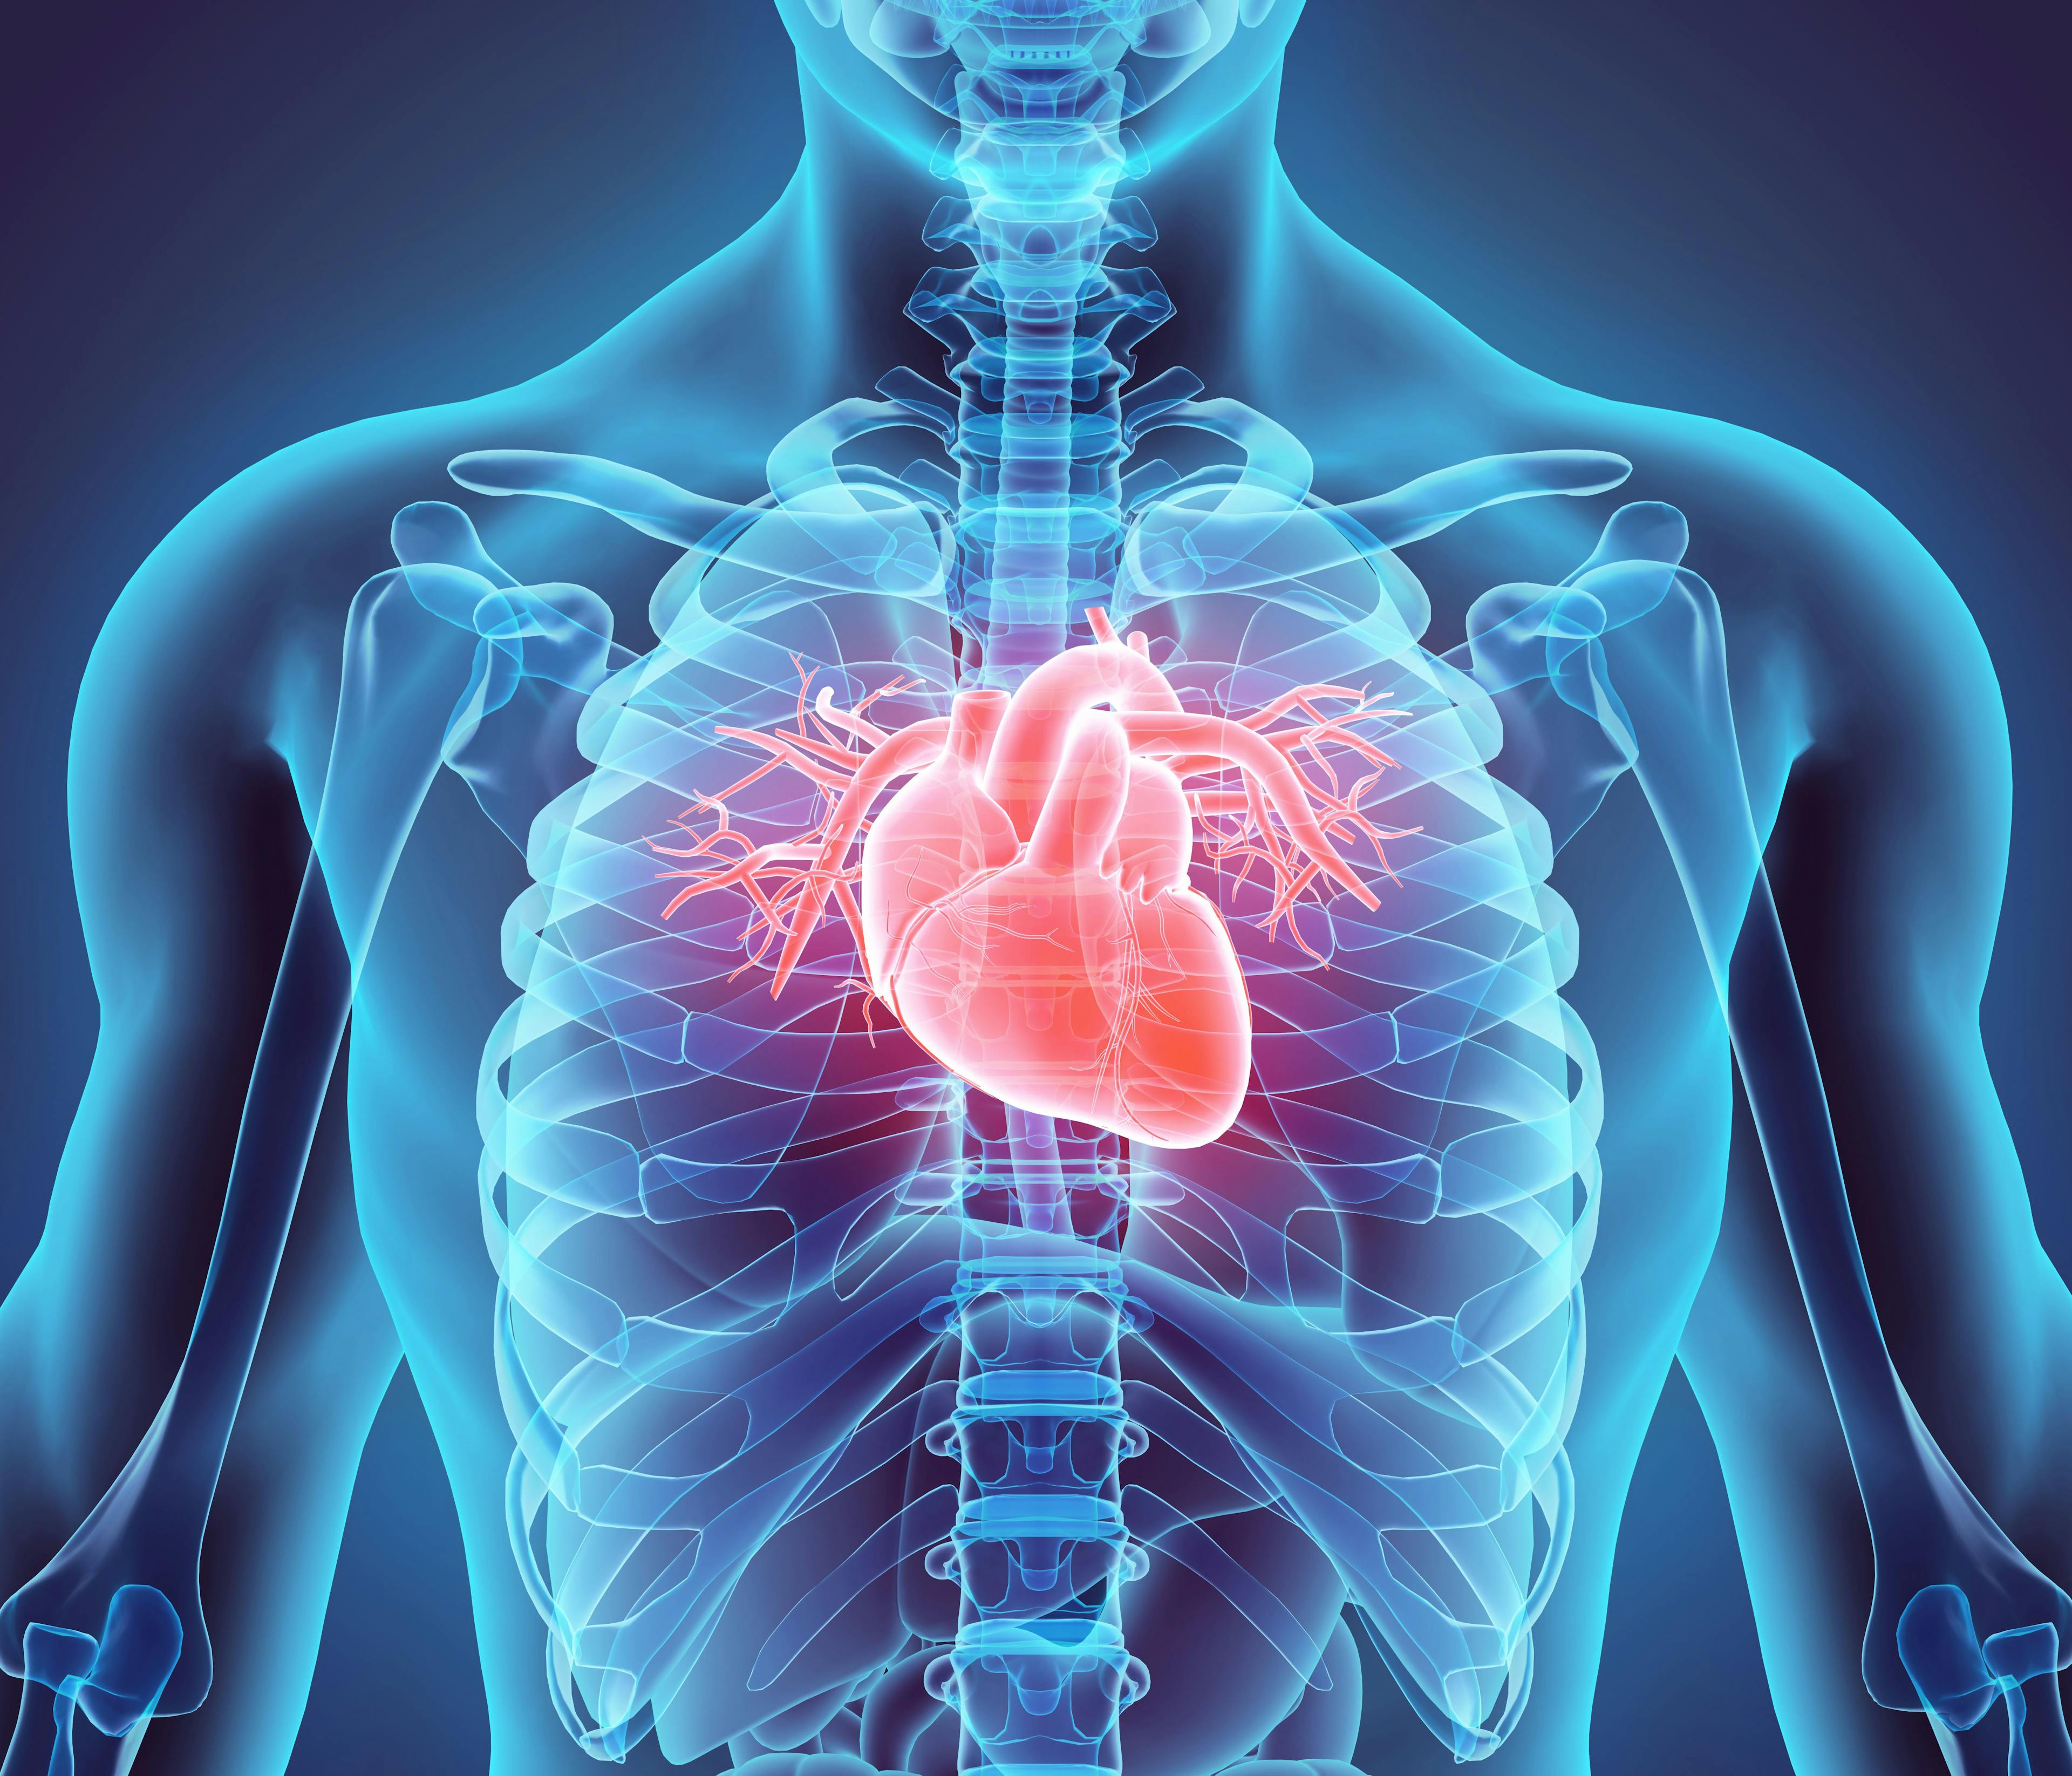 3D illustration of human heart